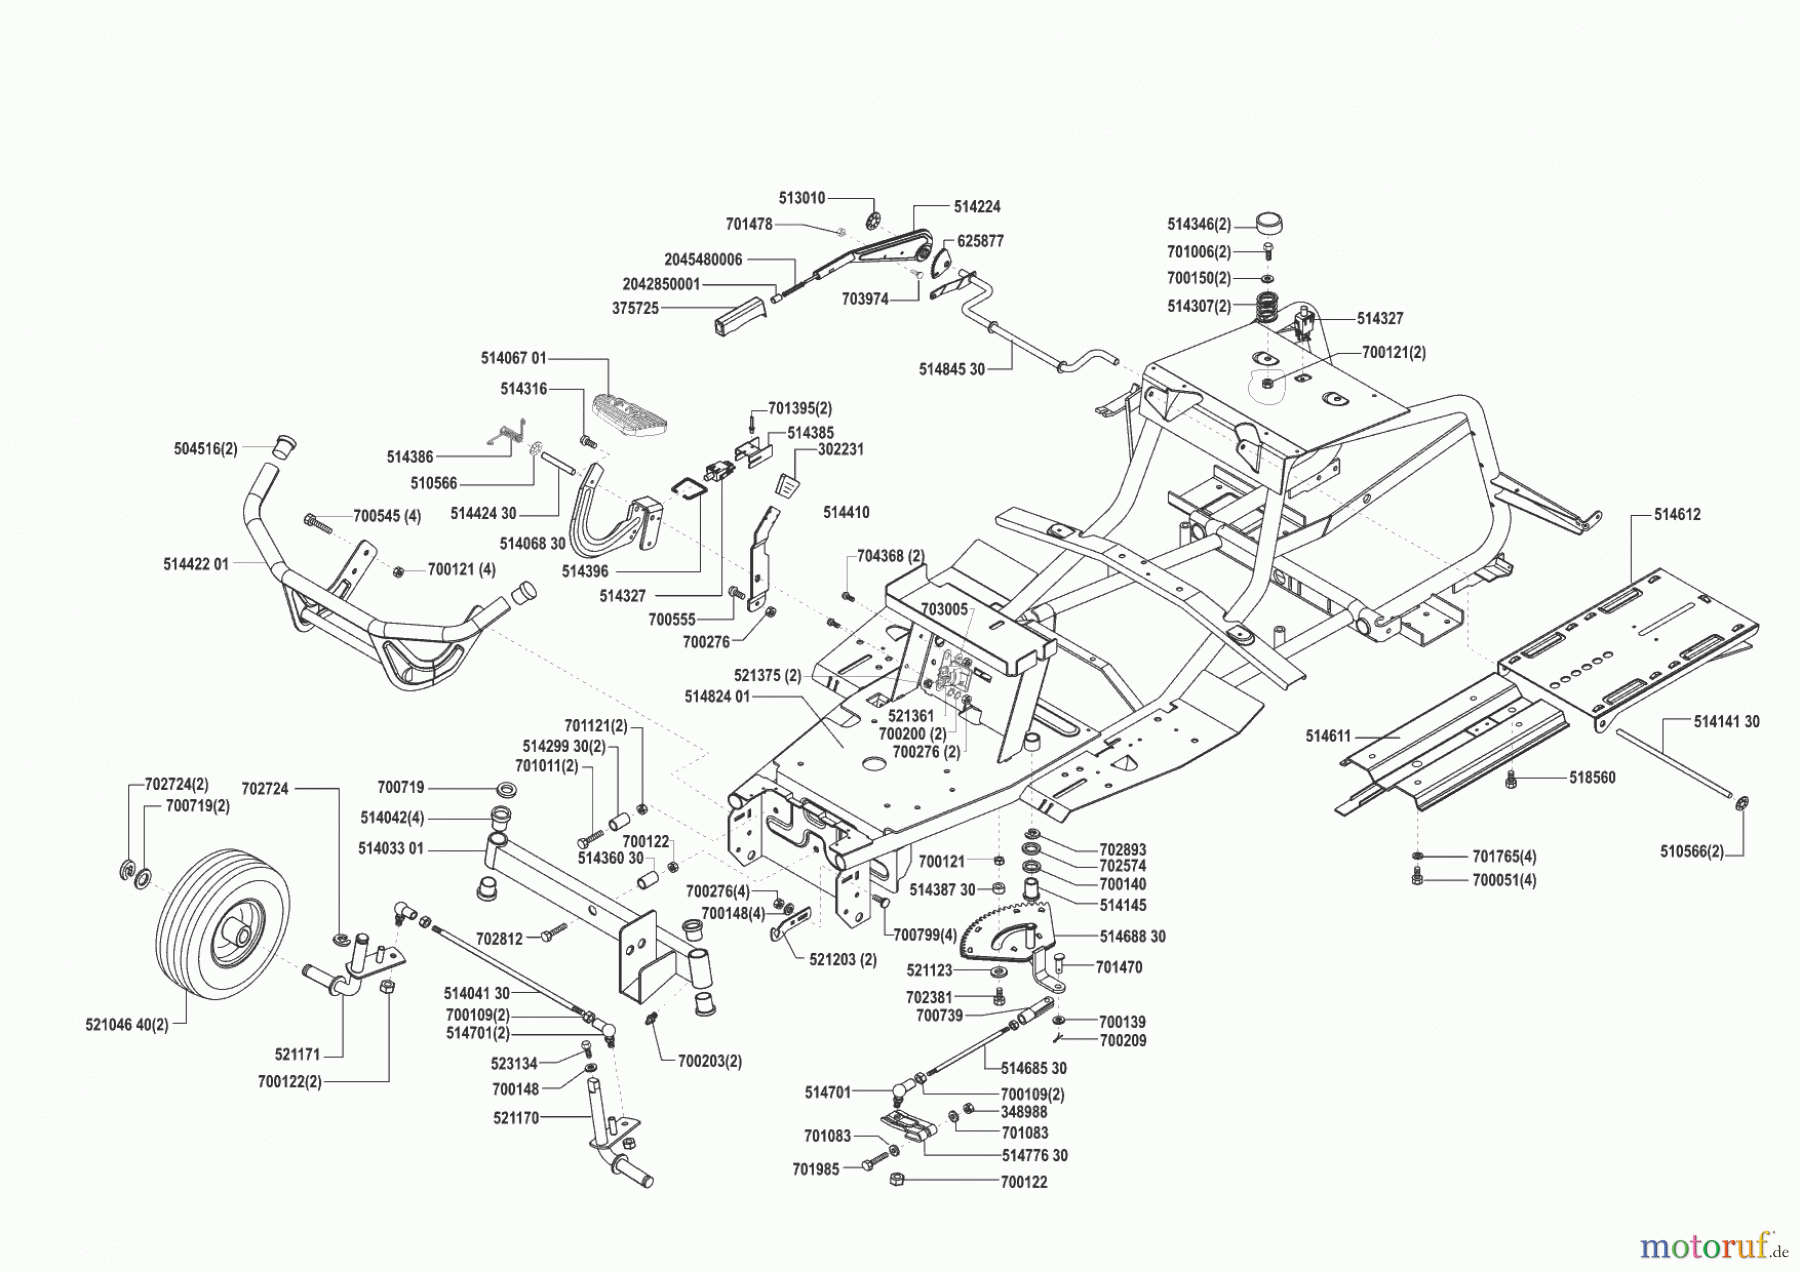  AL-KO Gartentechnik Rasentraktor T 13-102 Hochf. ab 04/2001 Seite 2